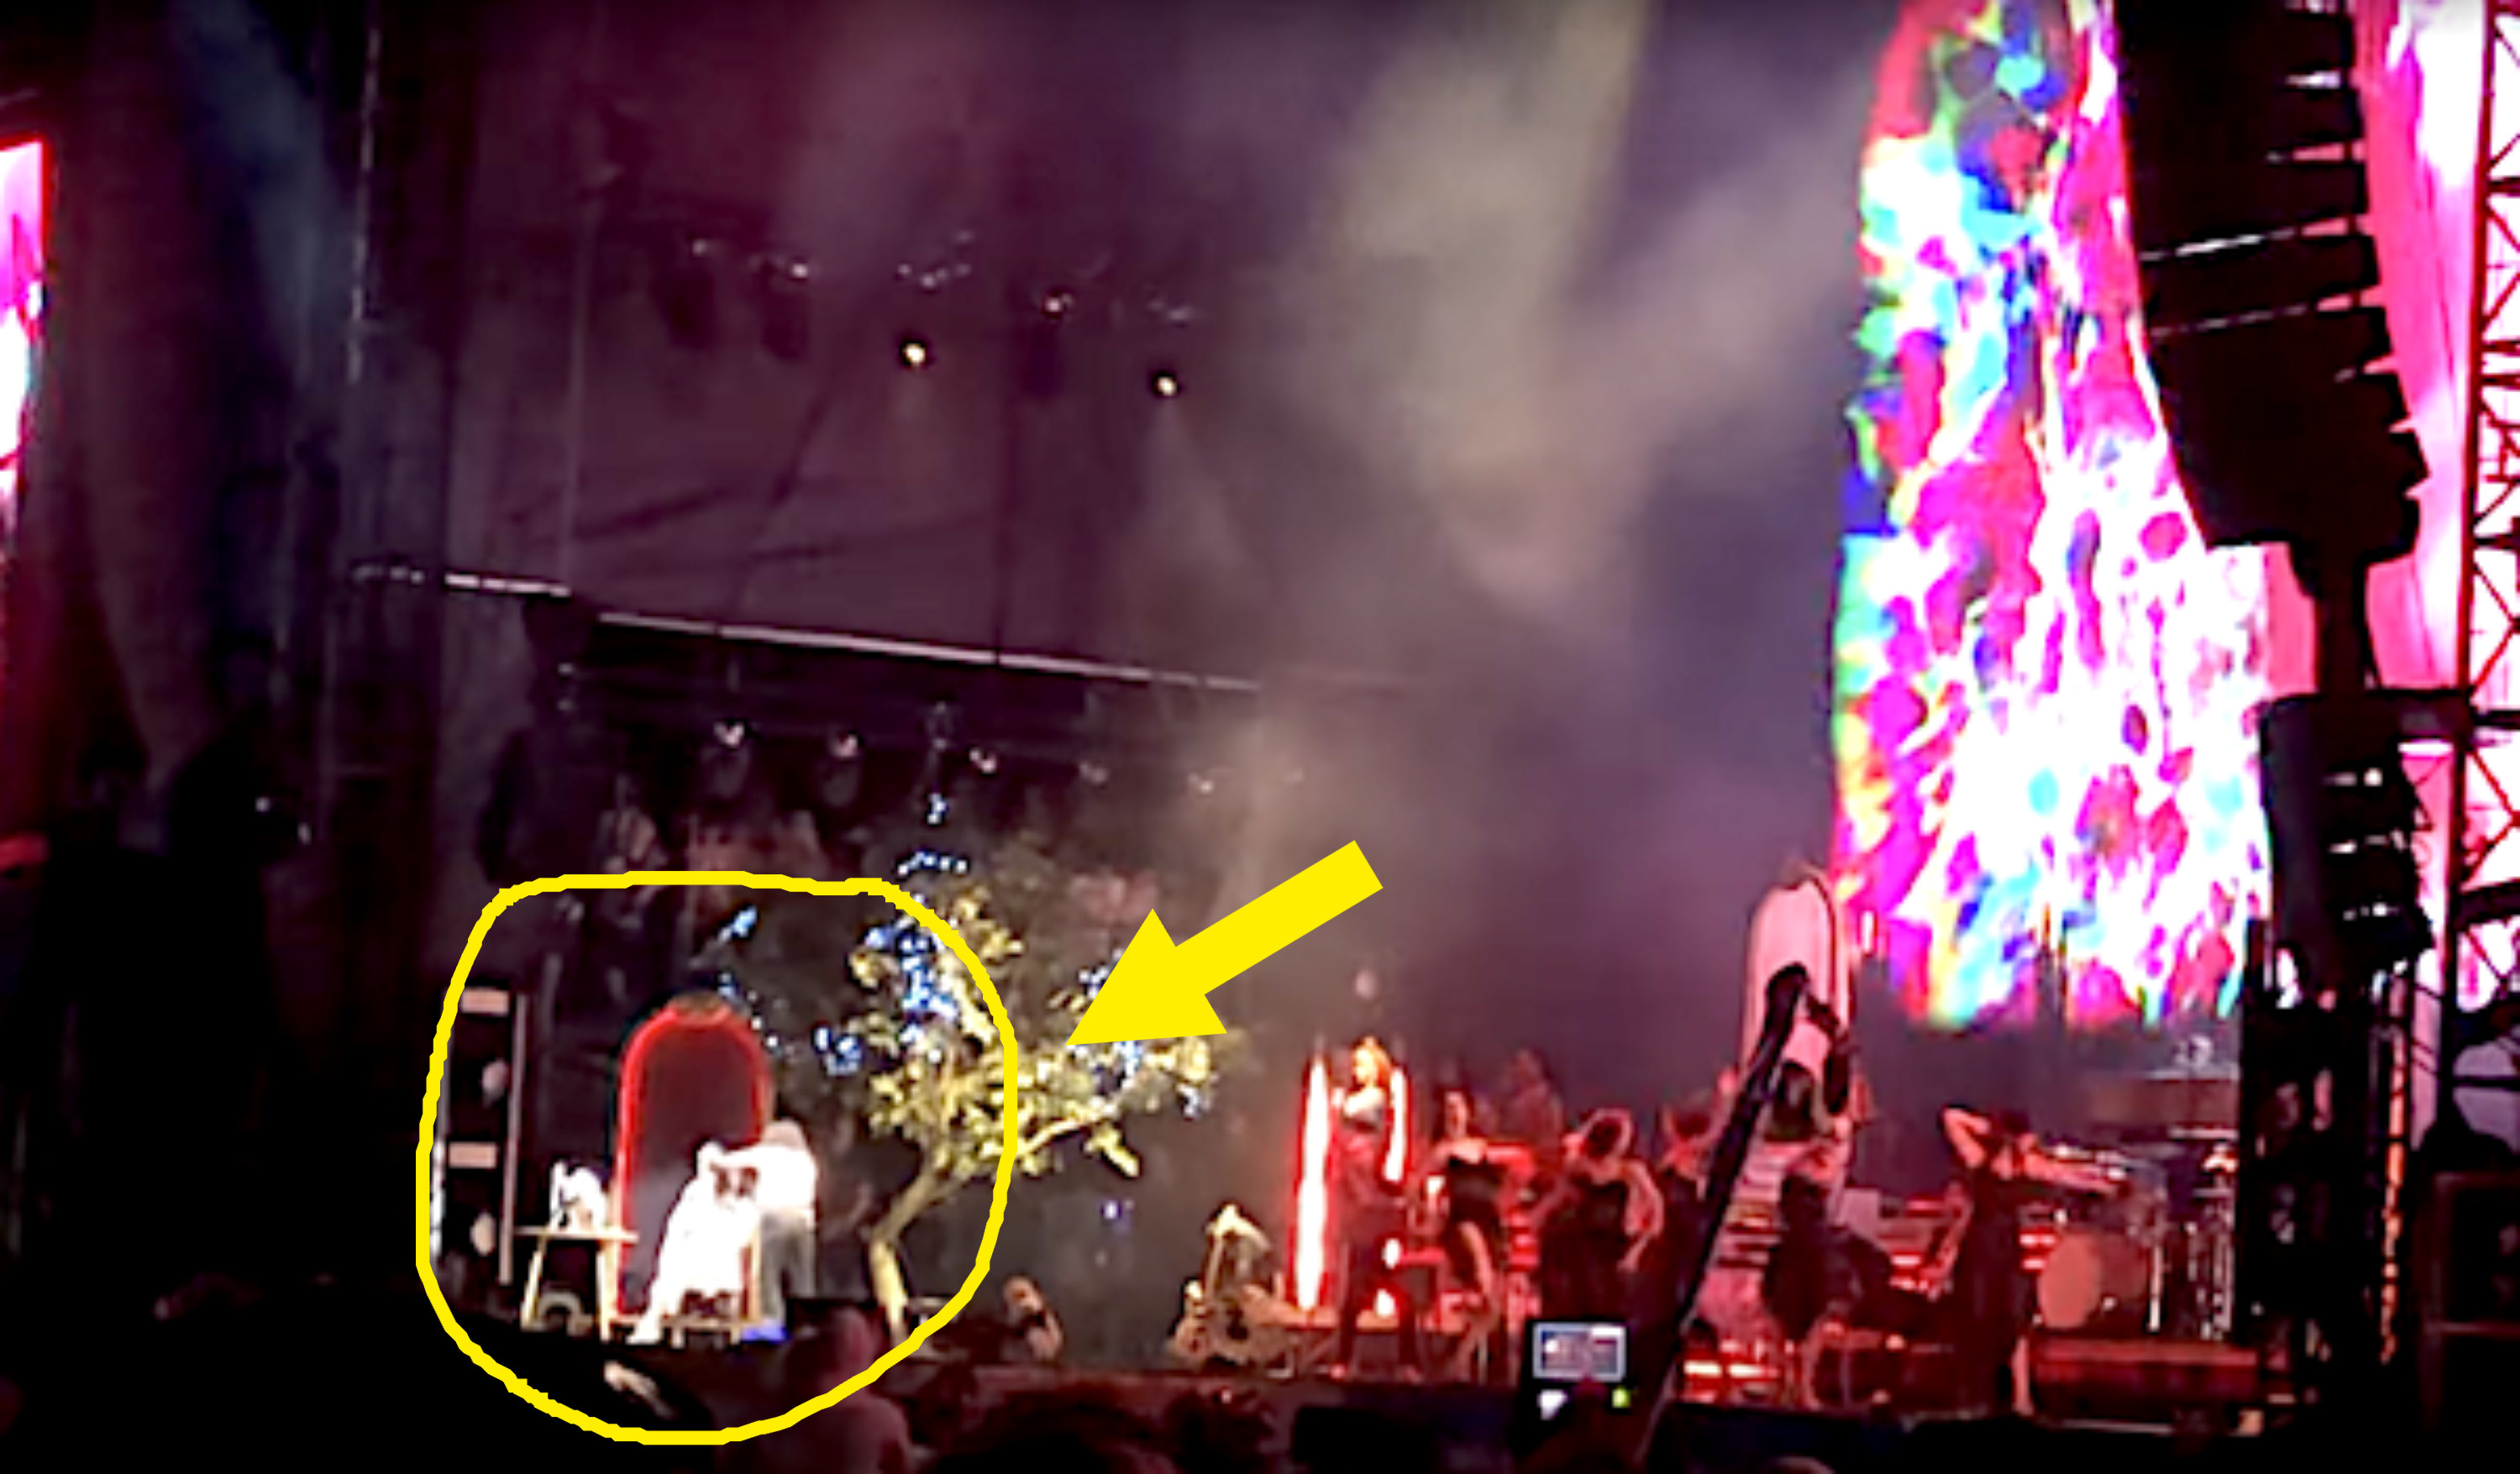 Arrow pointing to Lana Del Rey onstage